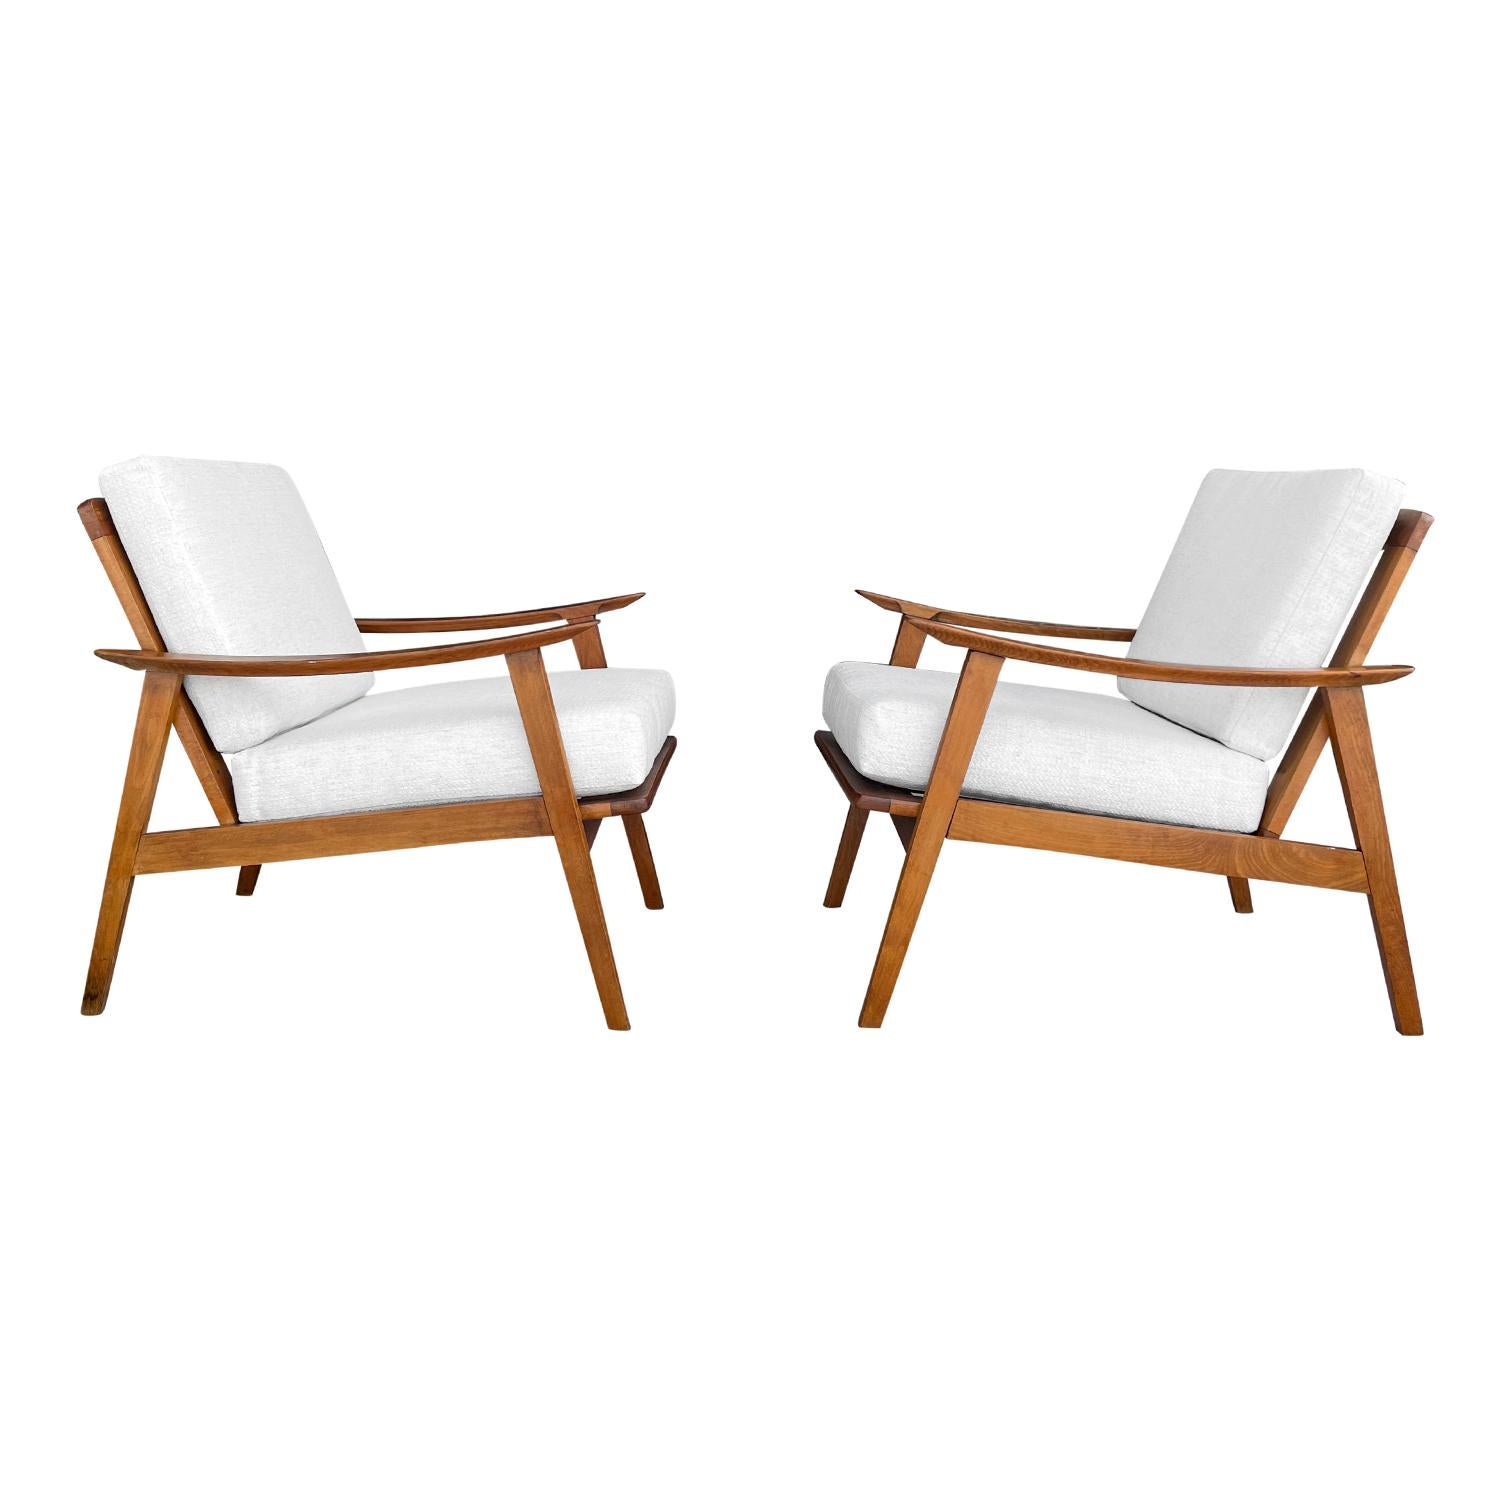 20th Century Danish Vintage Modern Pair of Open Teak Chairs by Kai Kristiansen For Sale 3